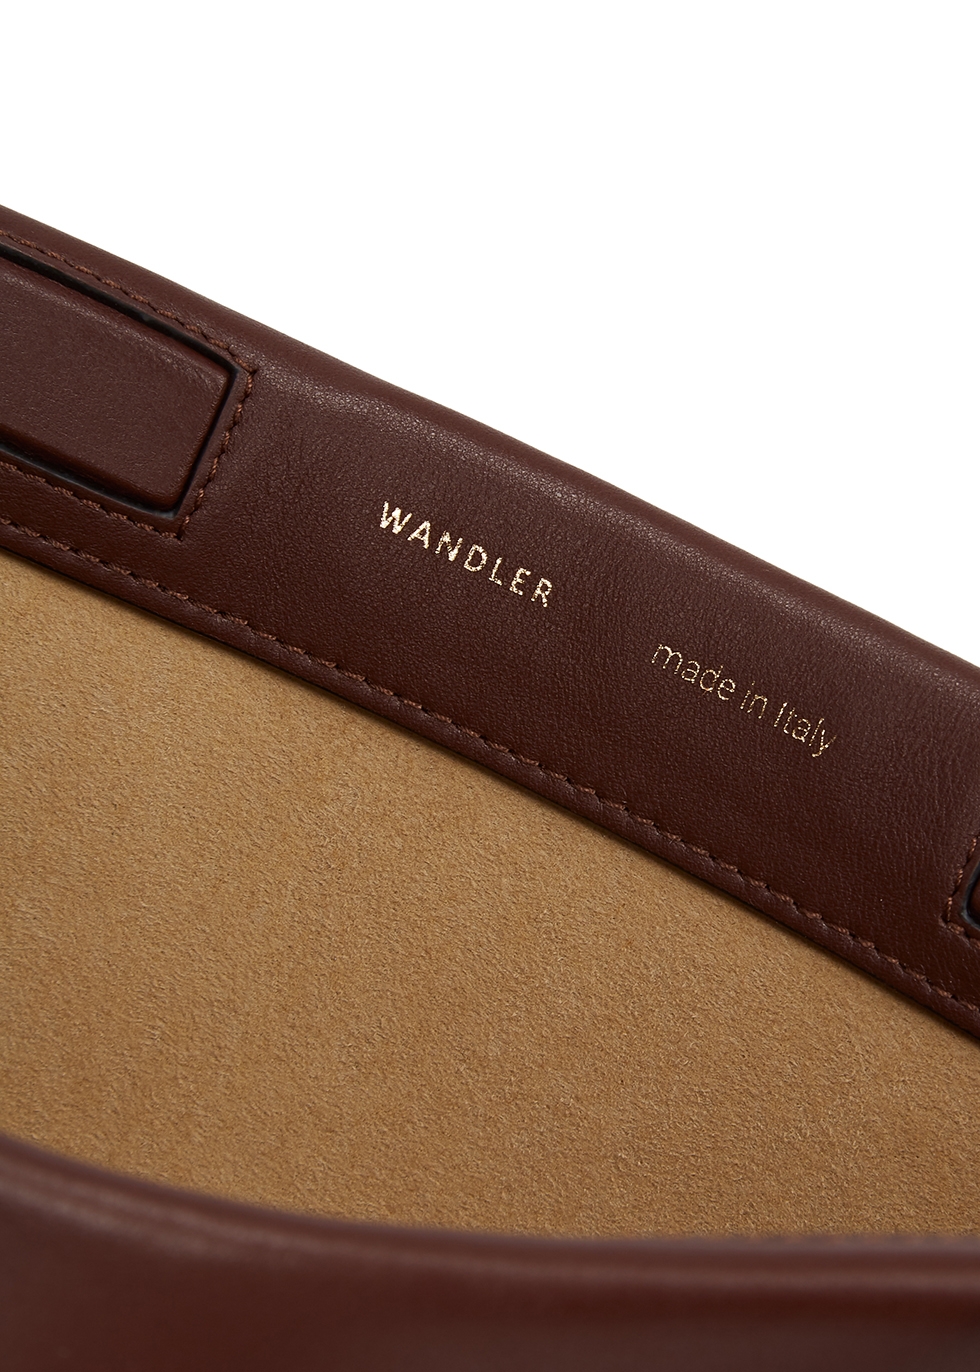 Wandler Hannah brown leather top handle bag - Harvey Nichols